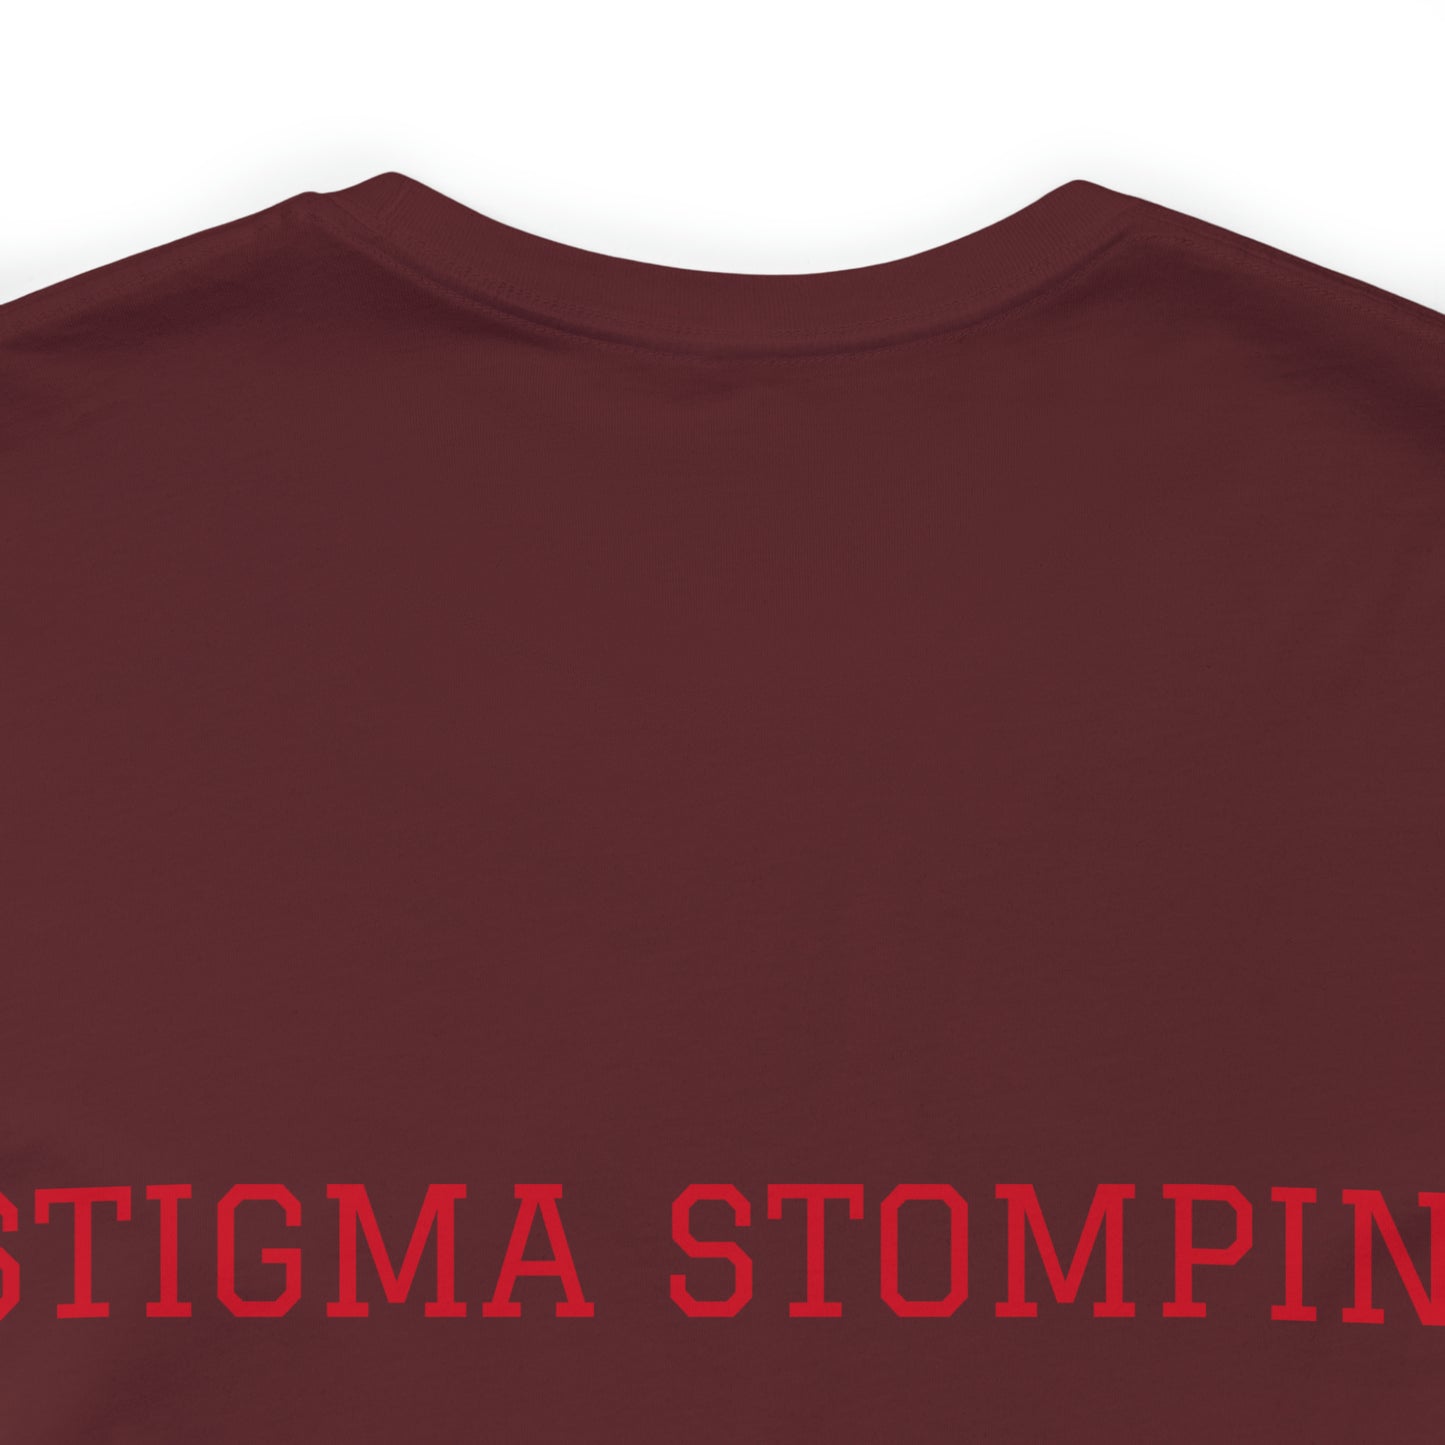 STIGMA STOMPING Logo Tee